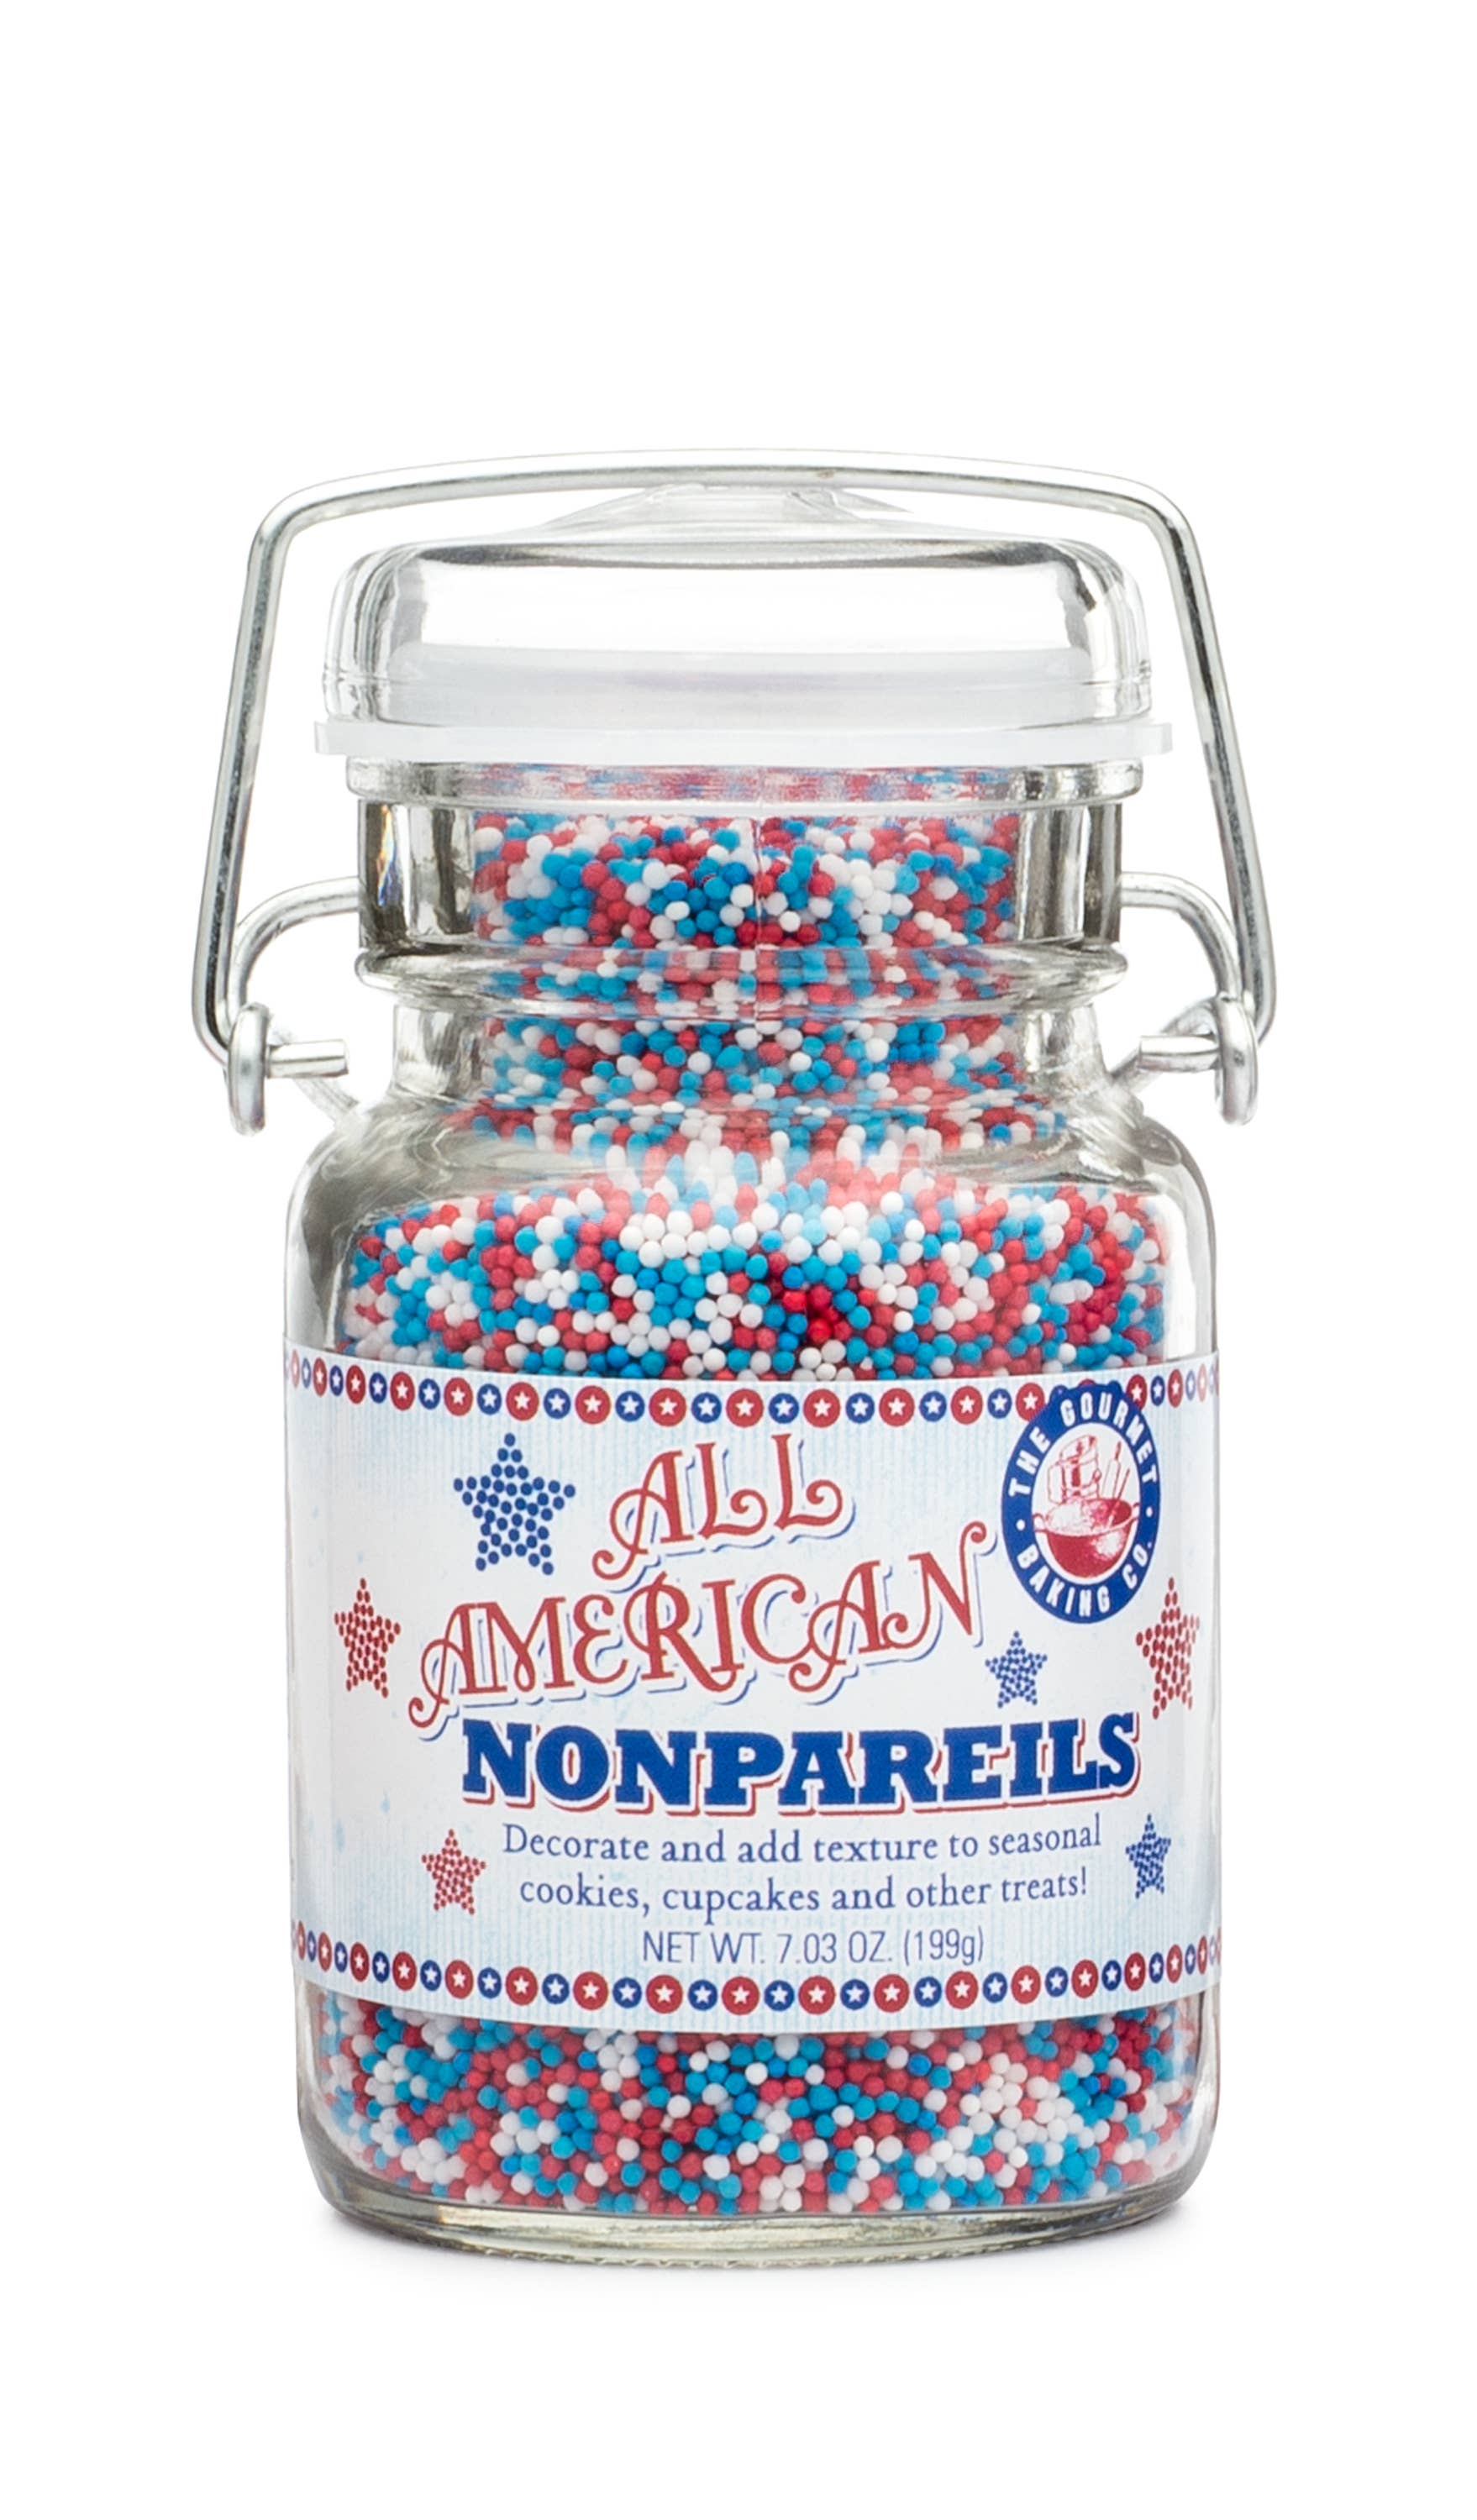 All American Nonpareils